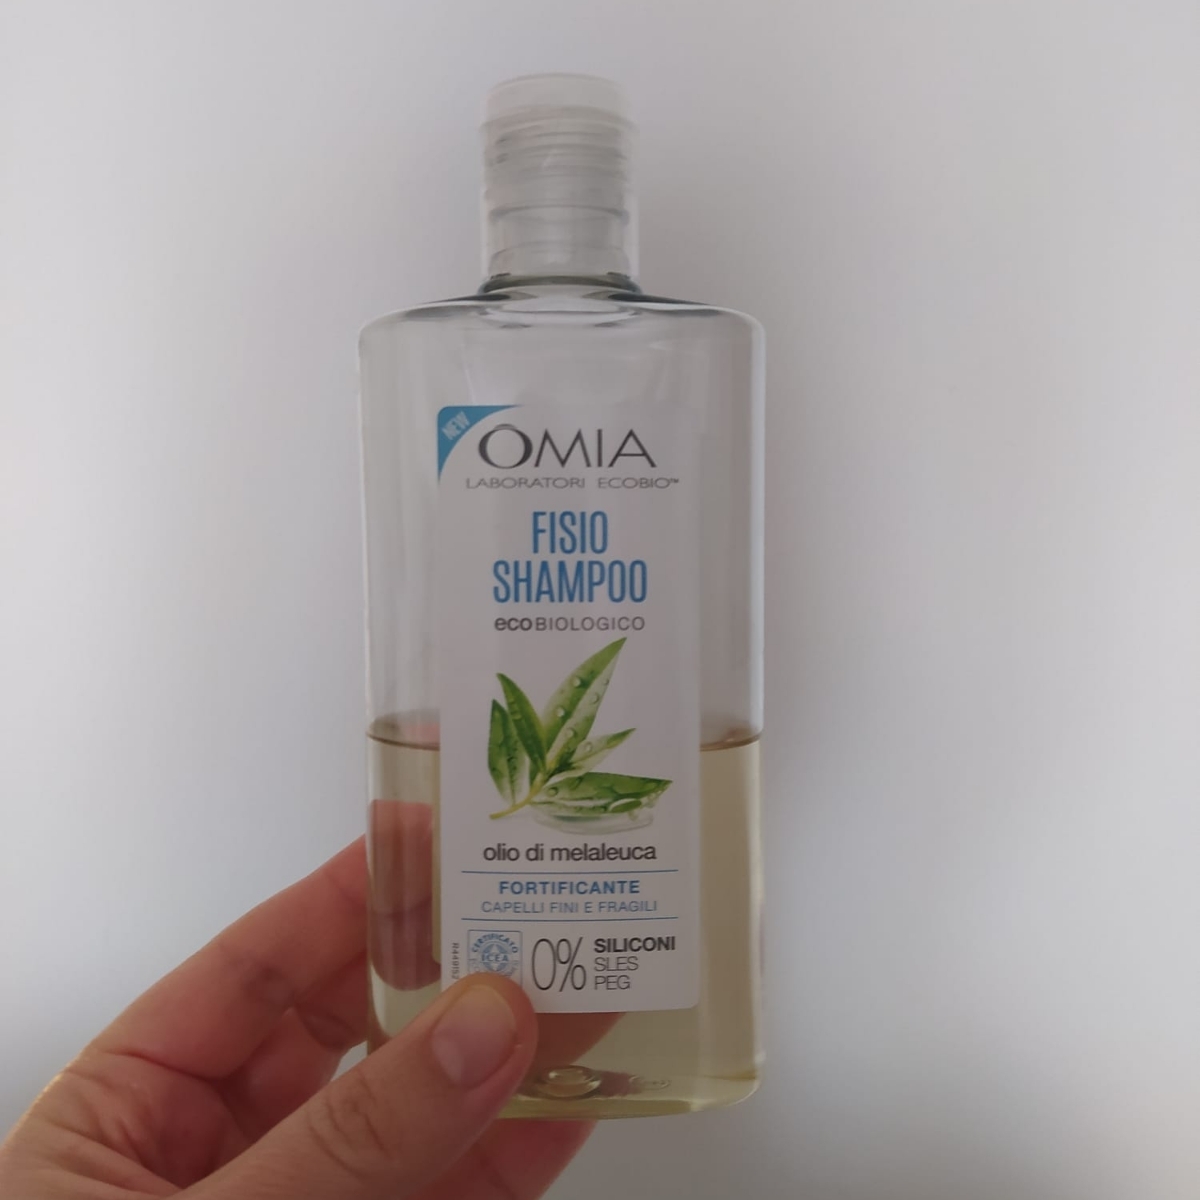 Omia Fisio shampoo Olio Di Melaleuca Reviews | abillion